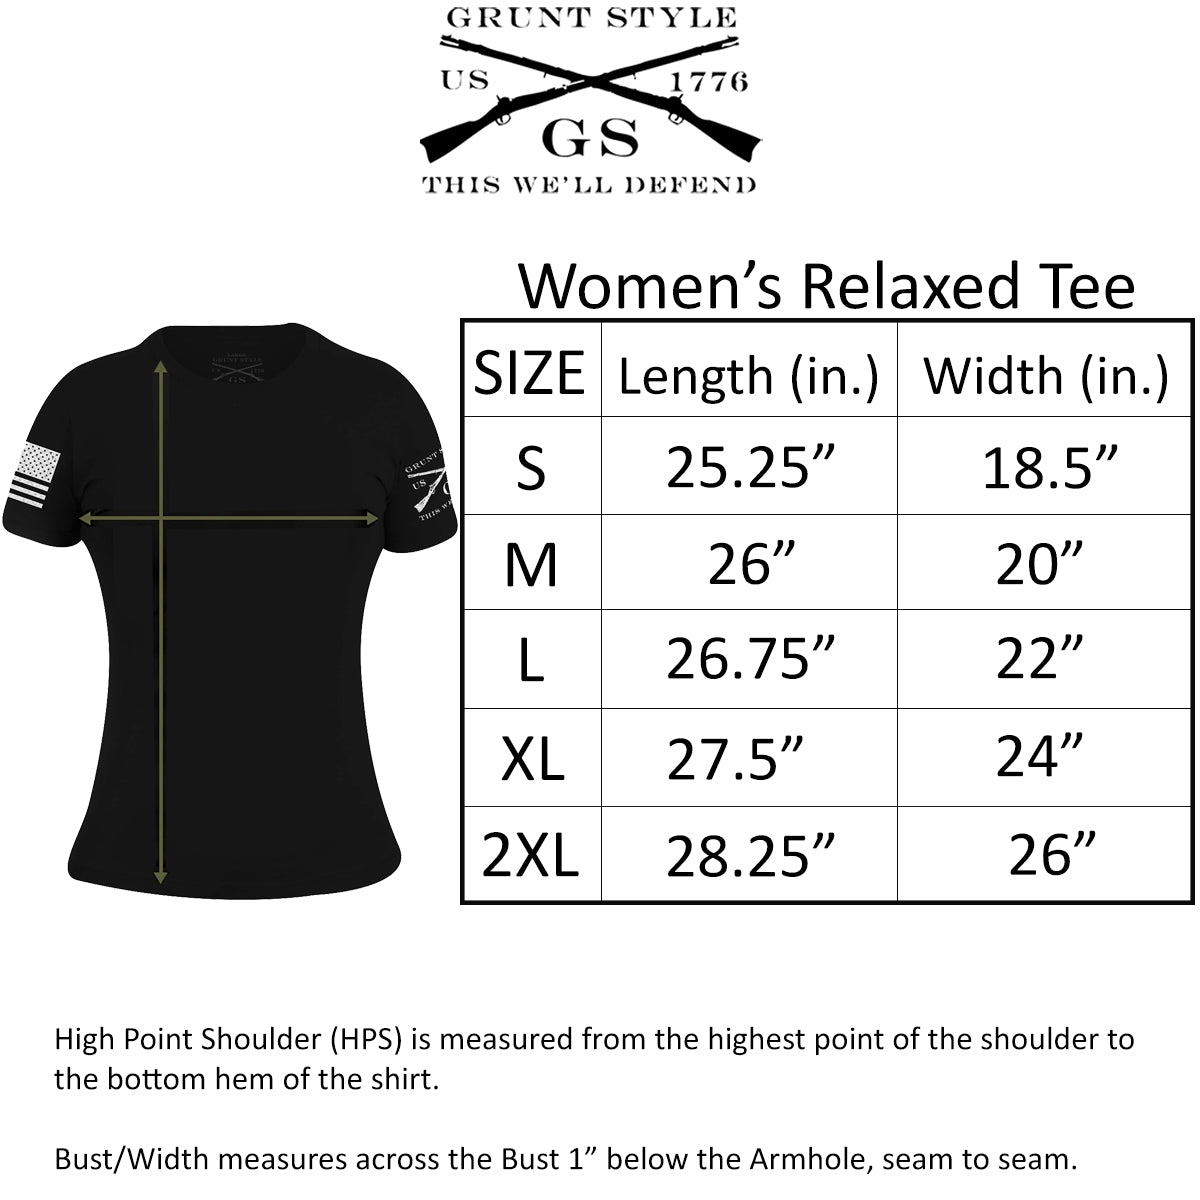 Grunt Style Women's American Woman 2.0 T-Shirt - Navy Grunt Style